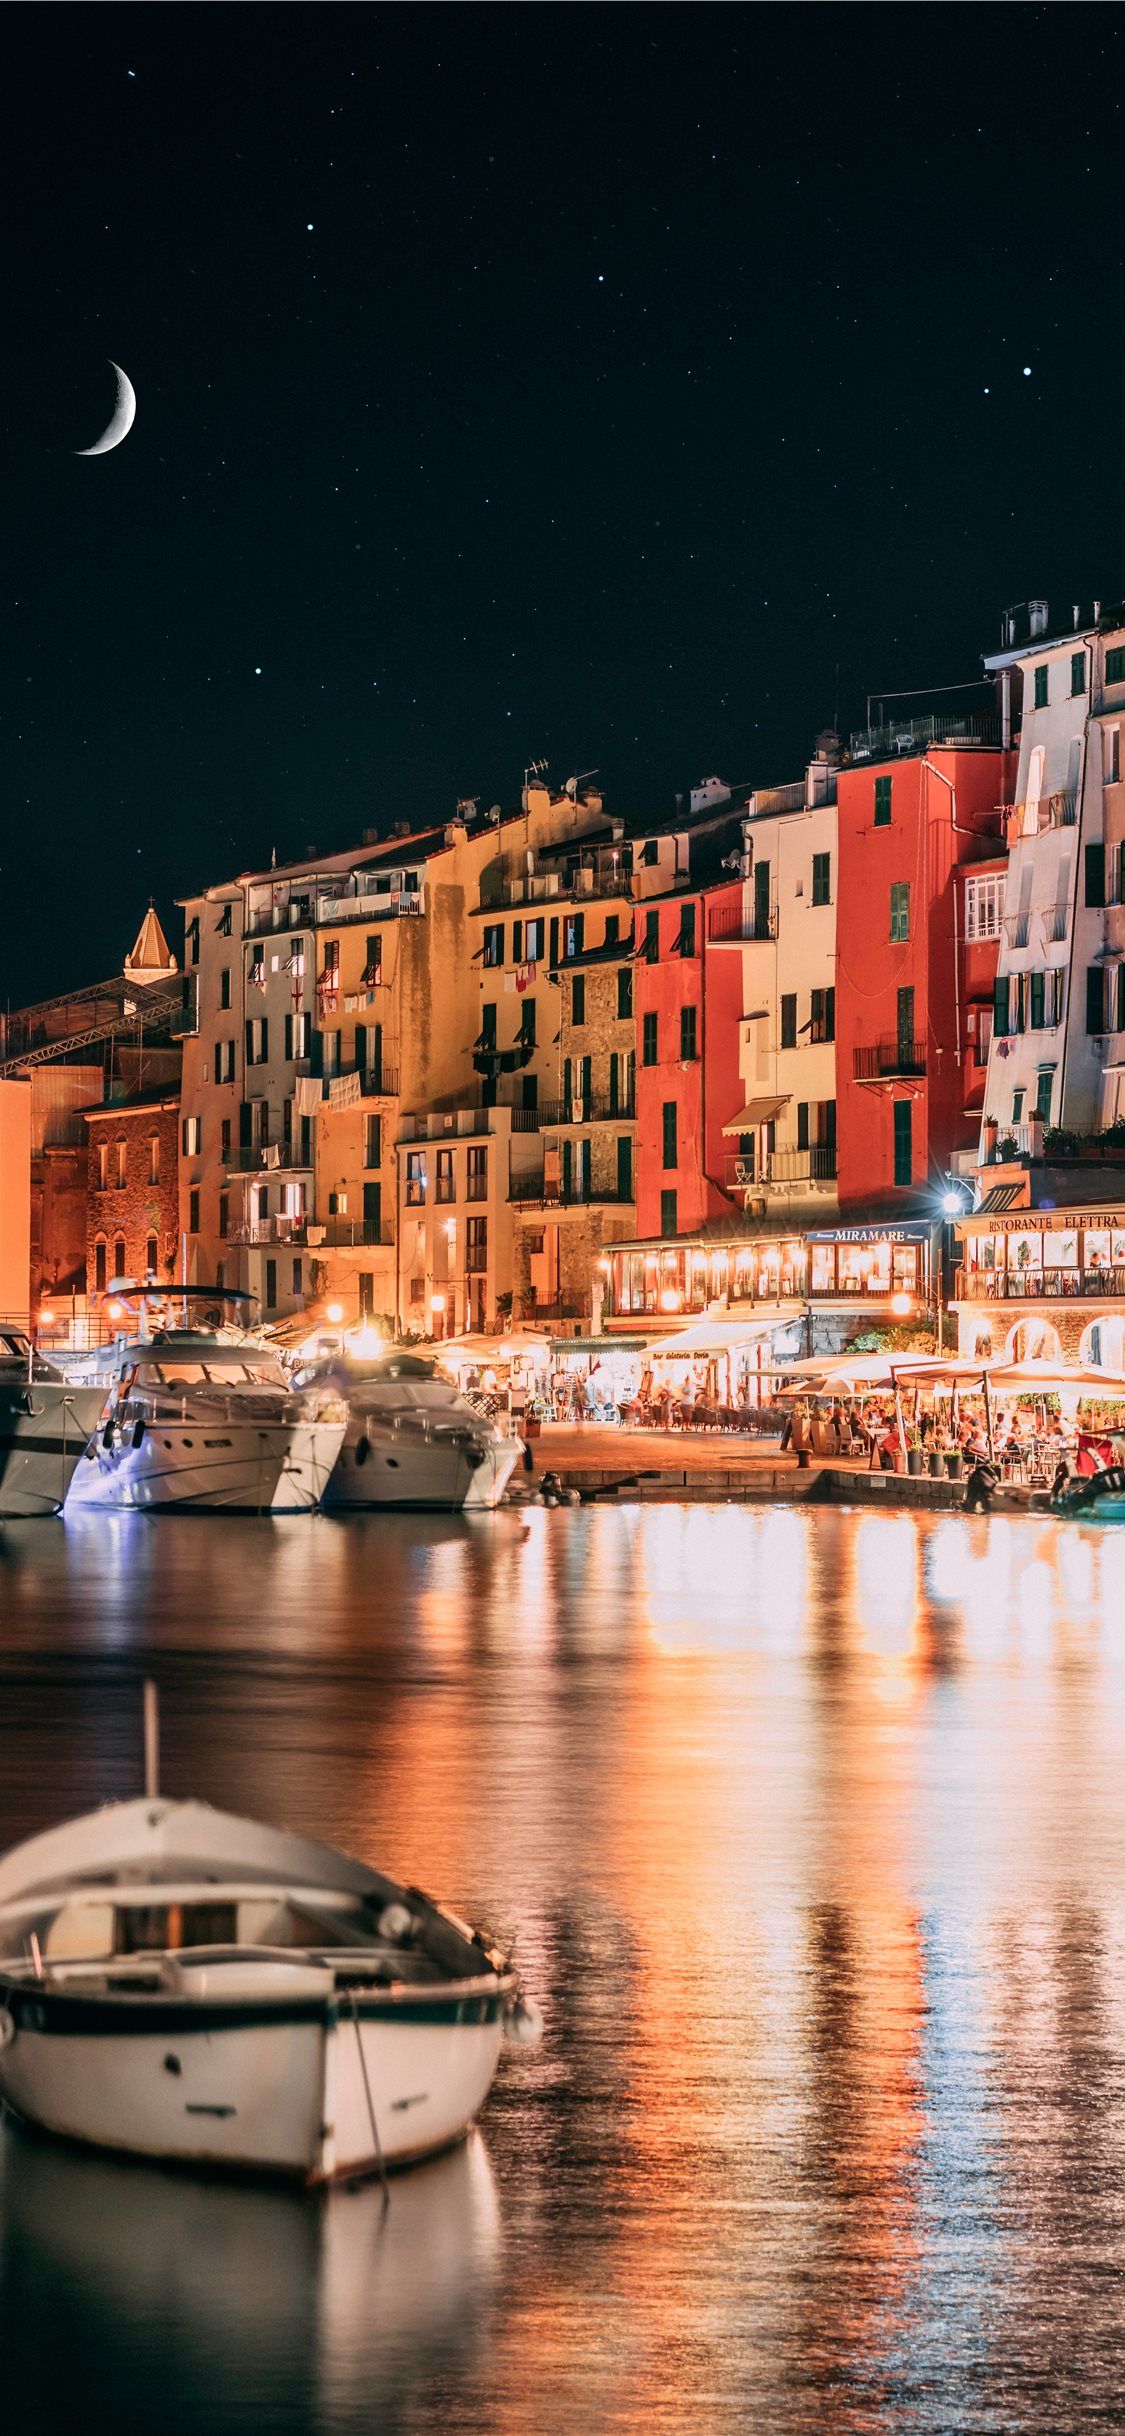 Italian riviera by night iPhone Wallpaper Free Download